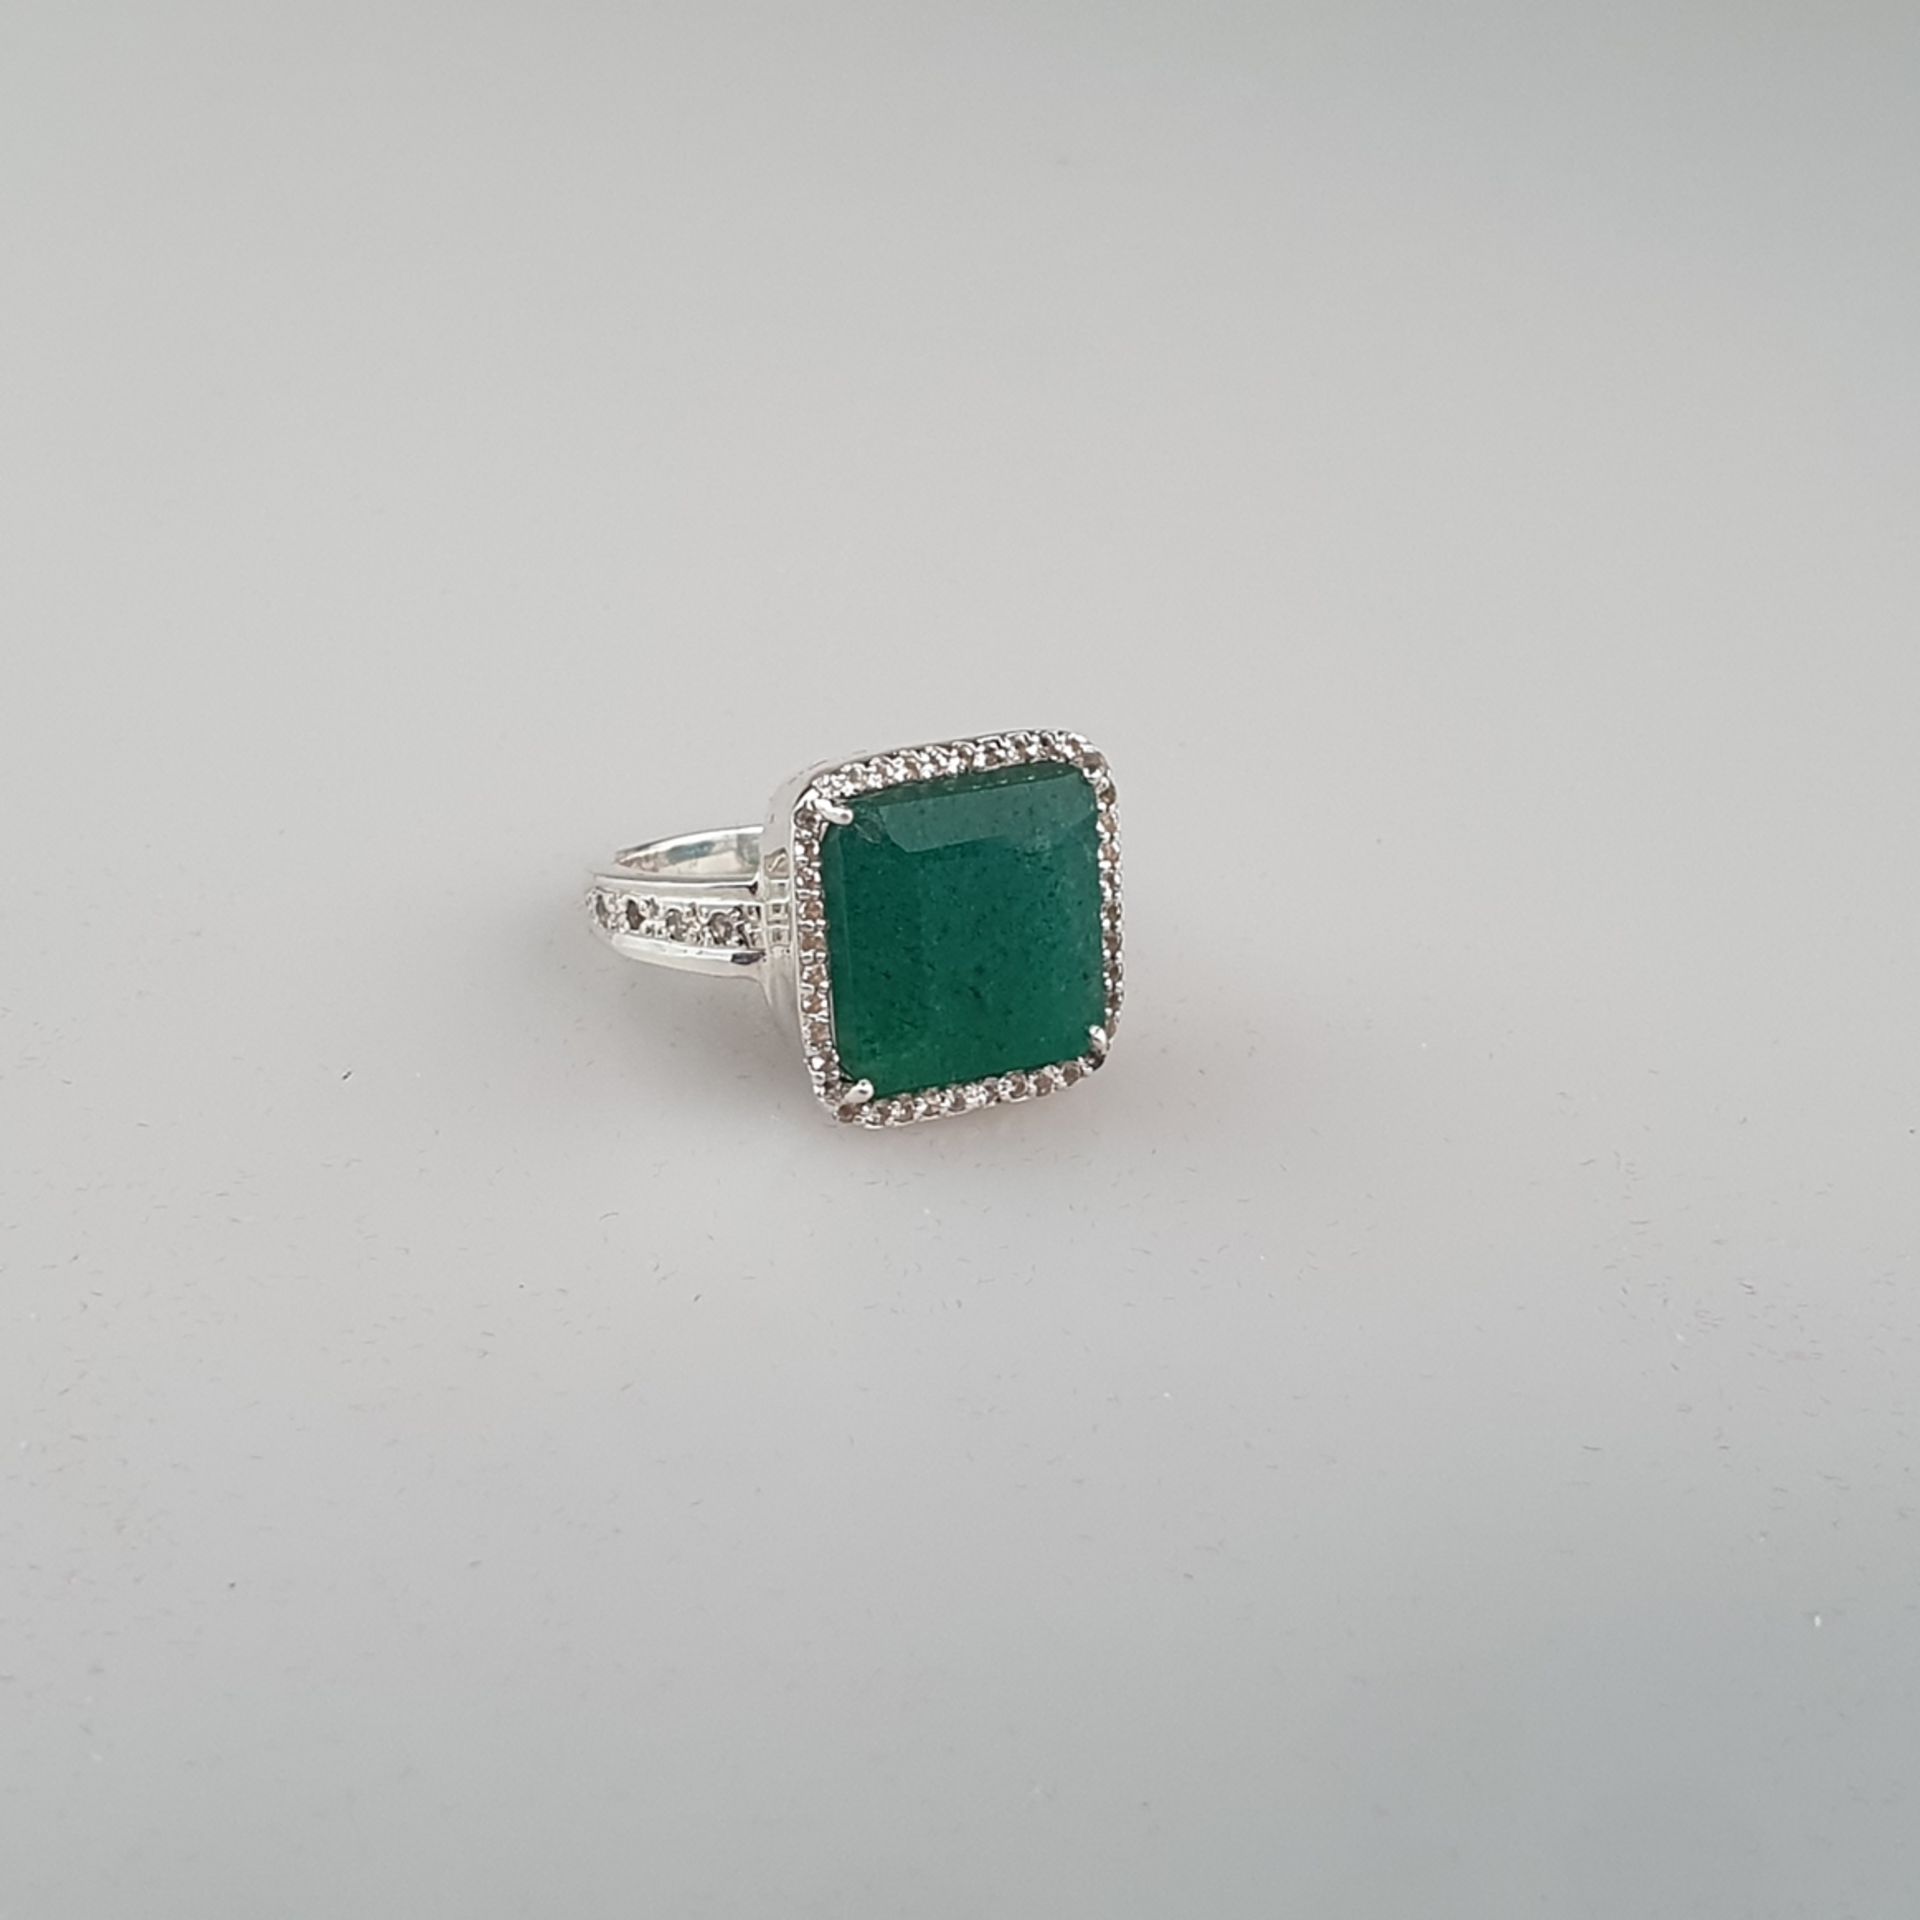 Silberring mit Smaragd - Sterling Silber, gestempelt, rechteckiger Ringkopf besetzt mit Smaragd im